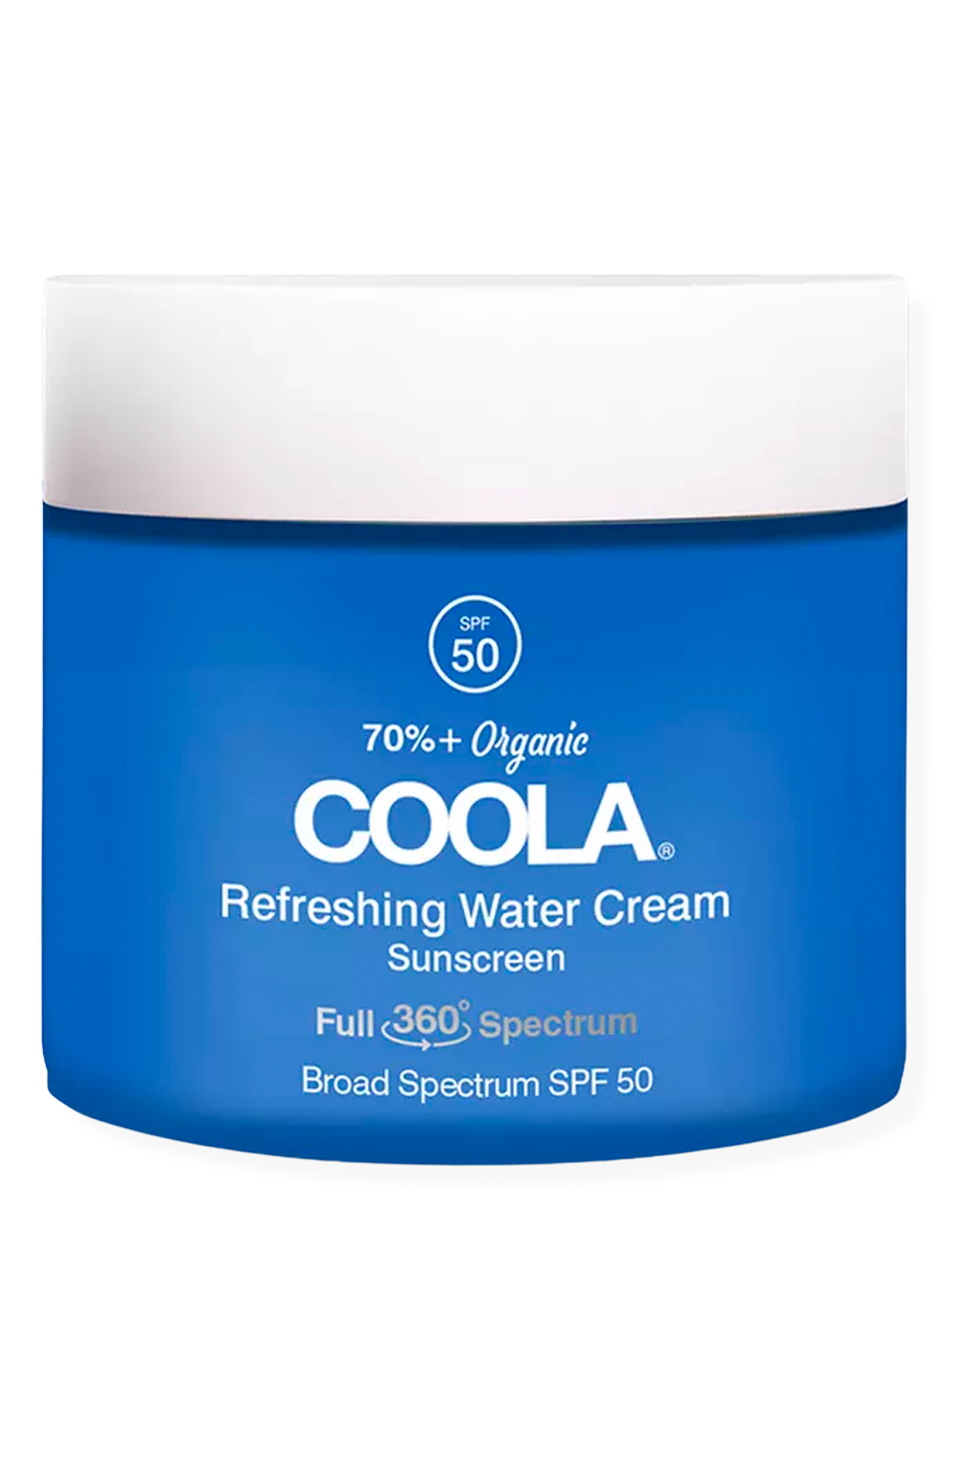 Refreshing Water Cream Moisturizer with SPF 50 